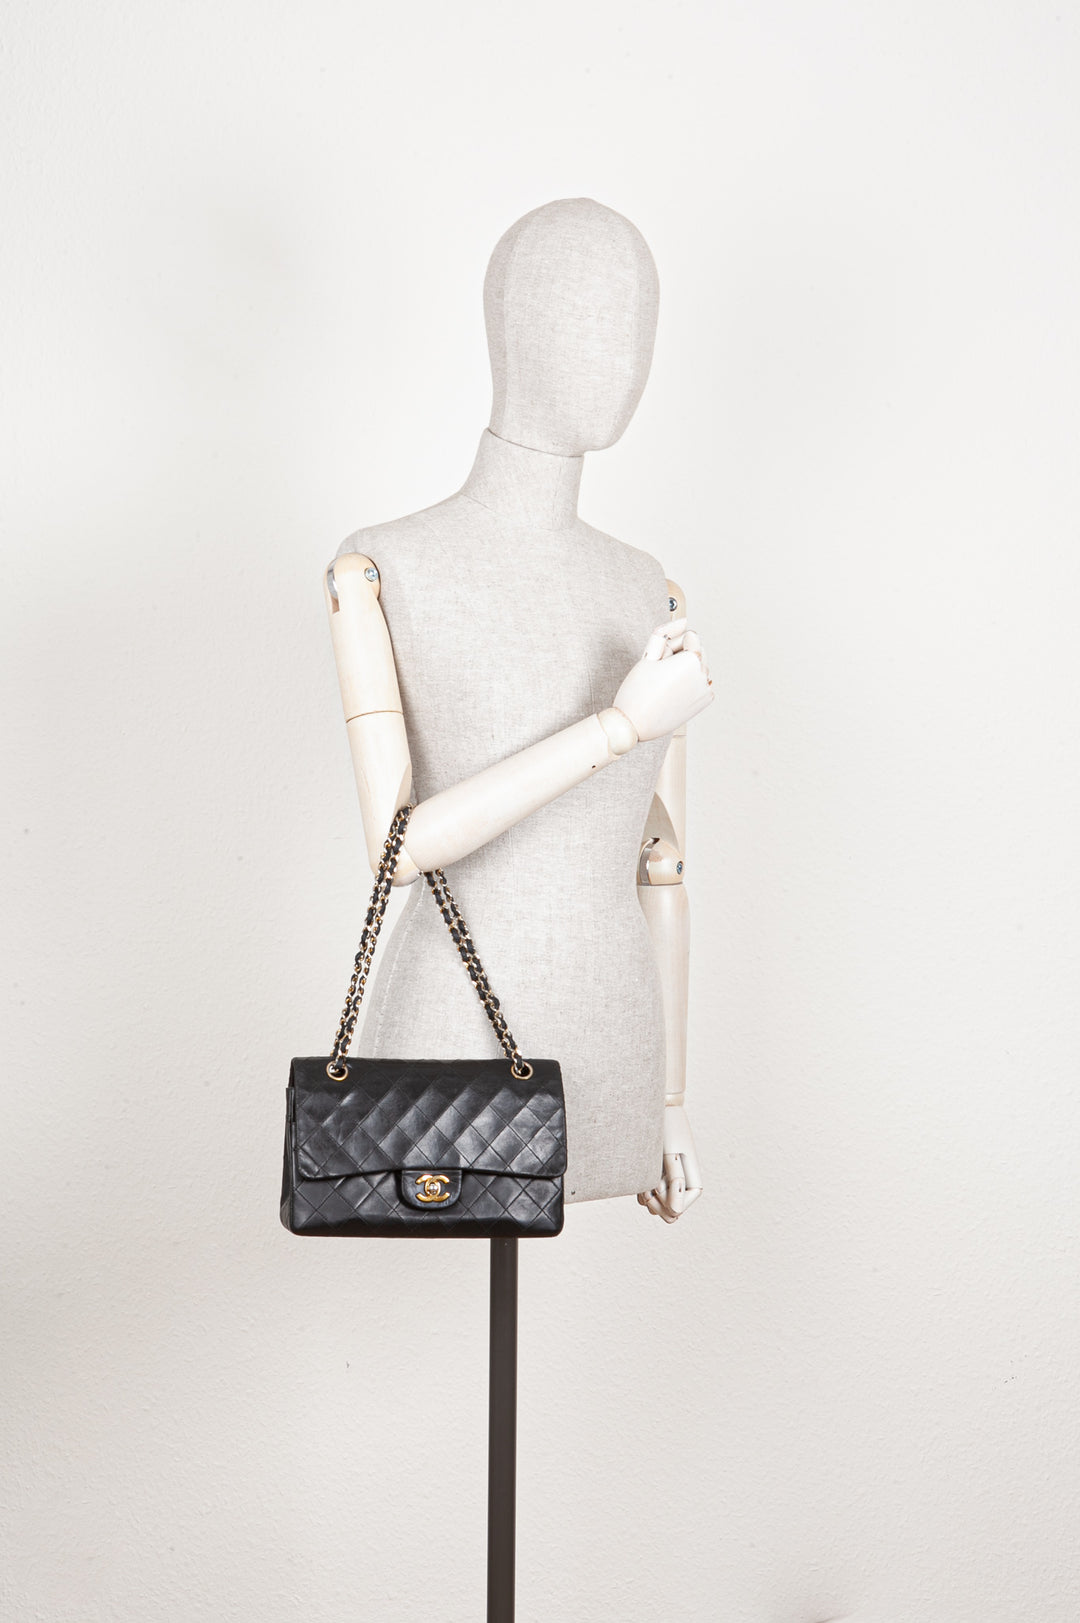 Chanel White Caviar Medium Classic Double Flap Bag 24k GHW